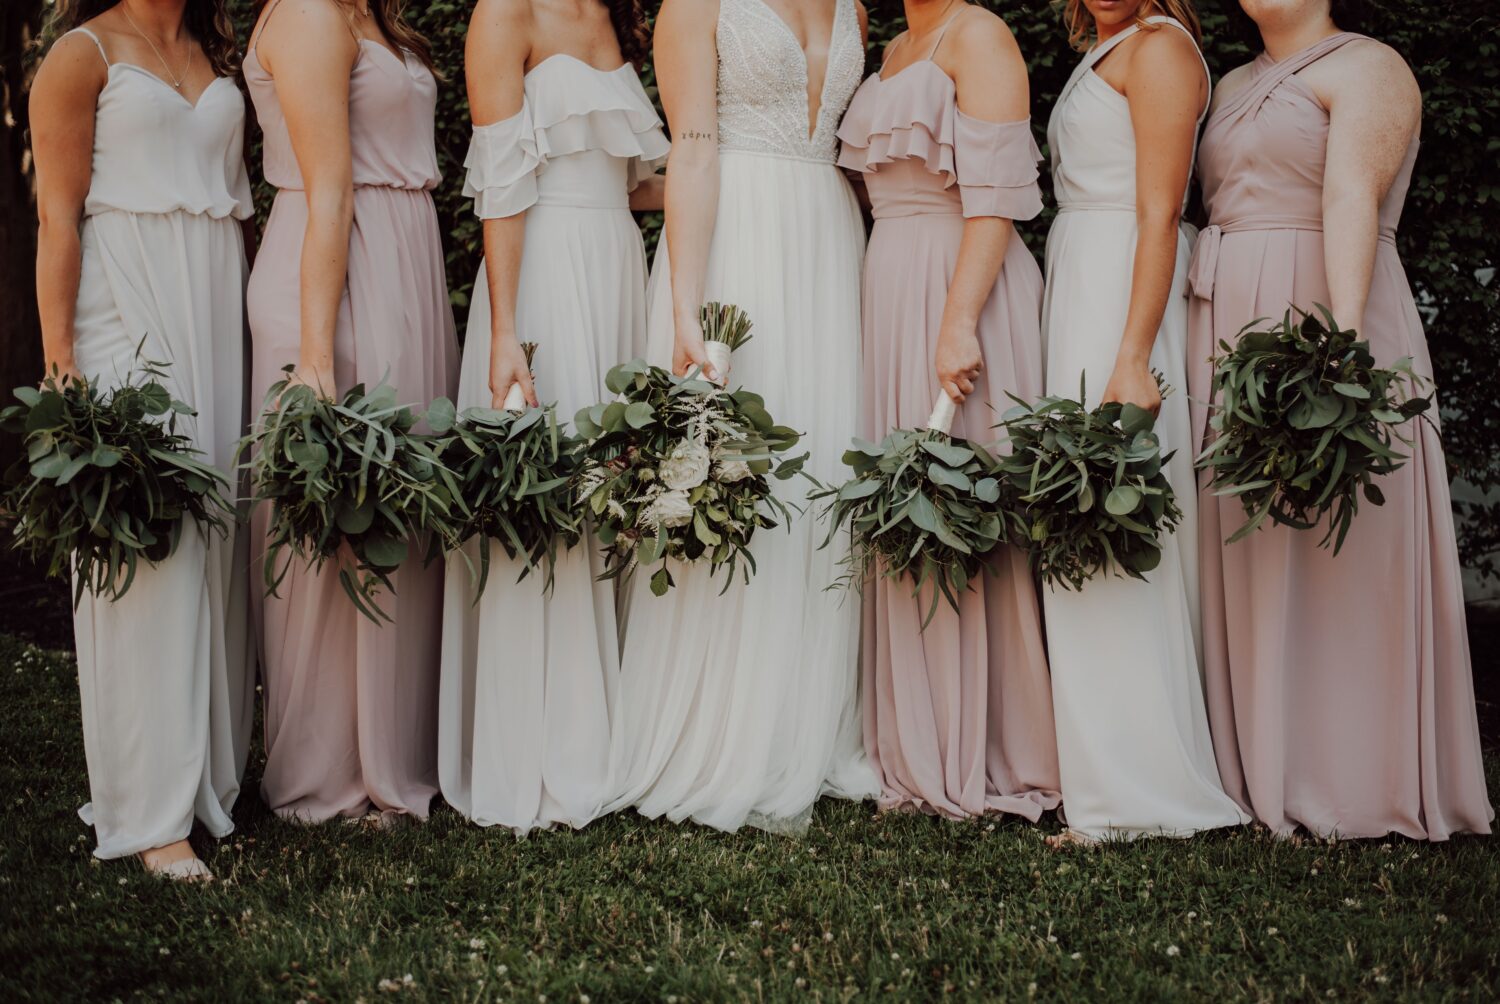 2021 Fall Bridesmaid Dresses Trends | Uncustomary